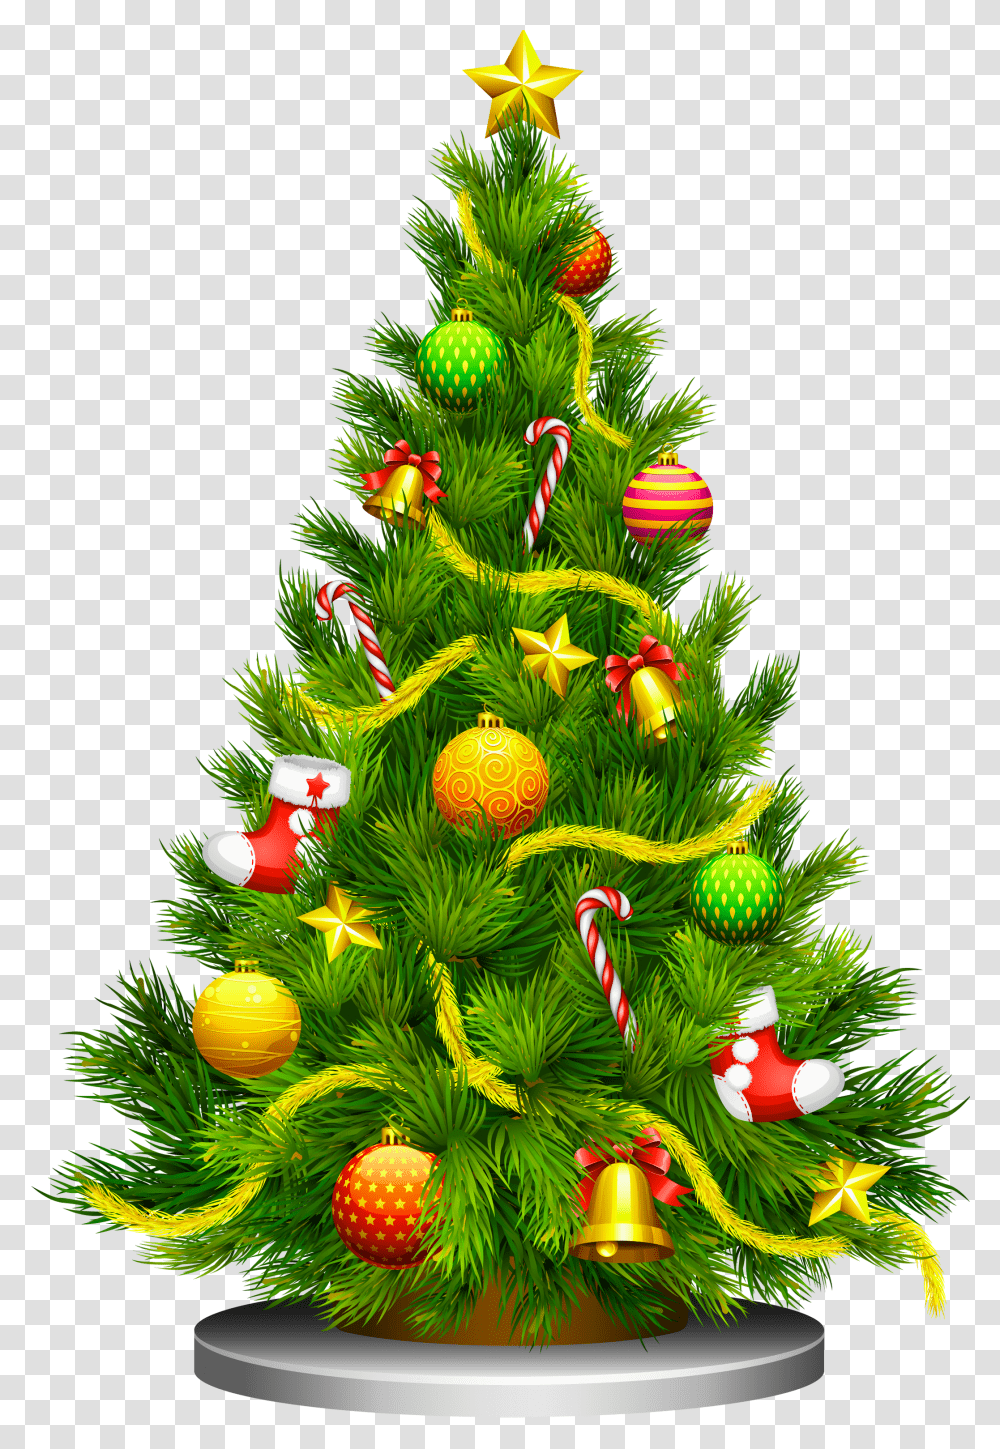 Festive Christmas Tree Image Christmas Tree Hd Transparent Png